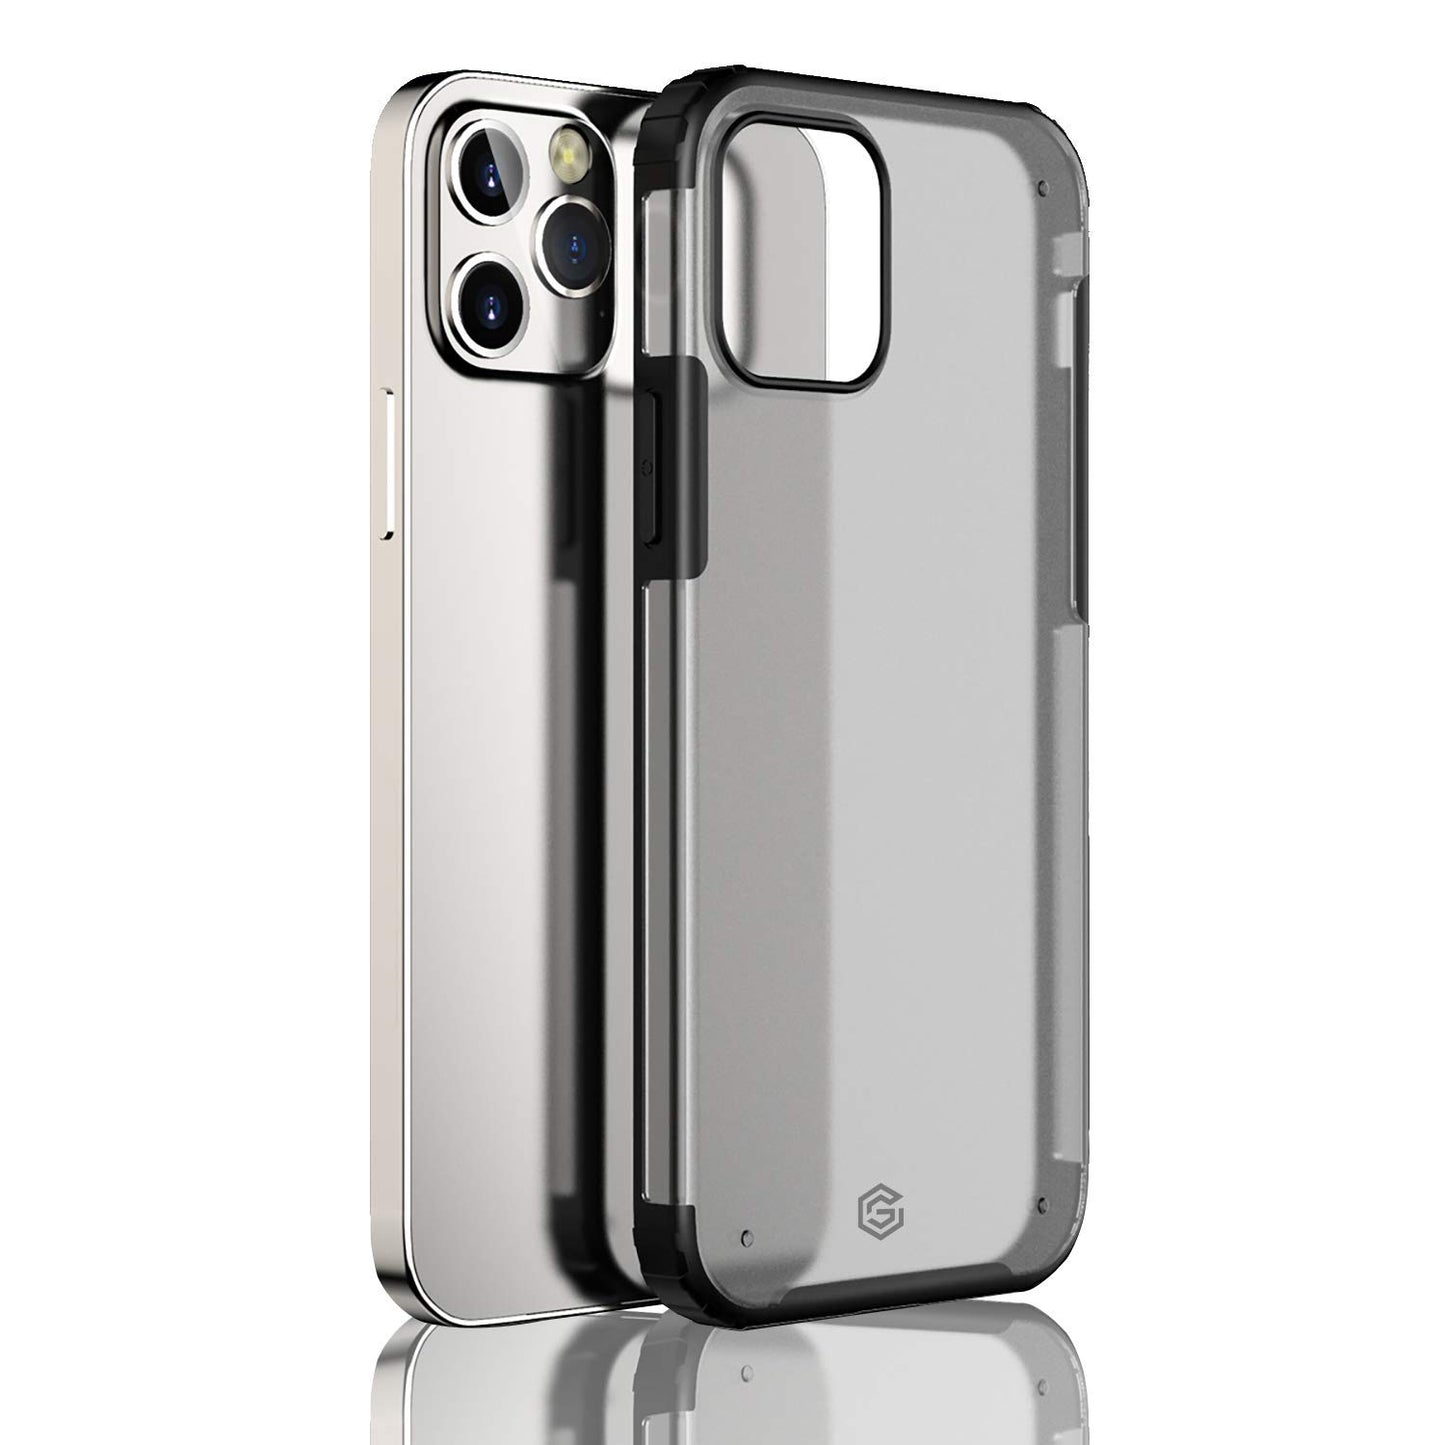 GRIPP Amaze Pro Translucent Matte Back Case for iPhone 12 Pro Max - Black